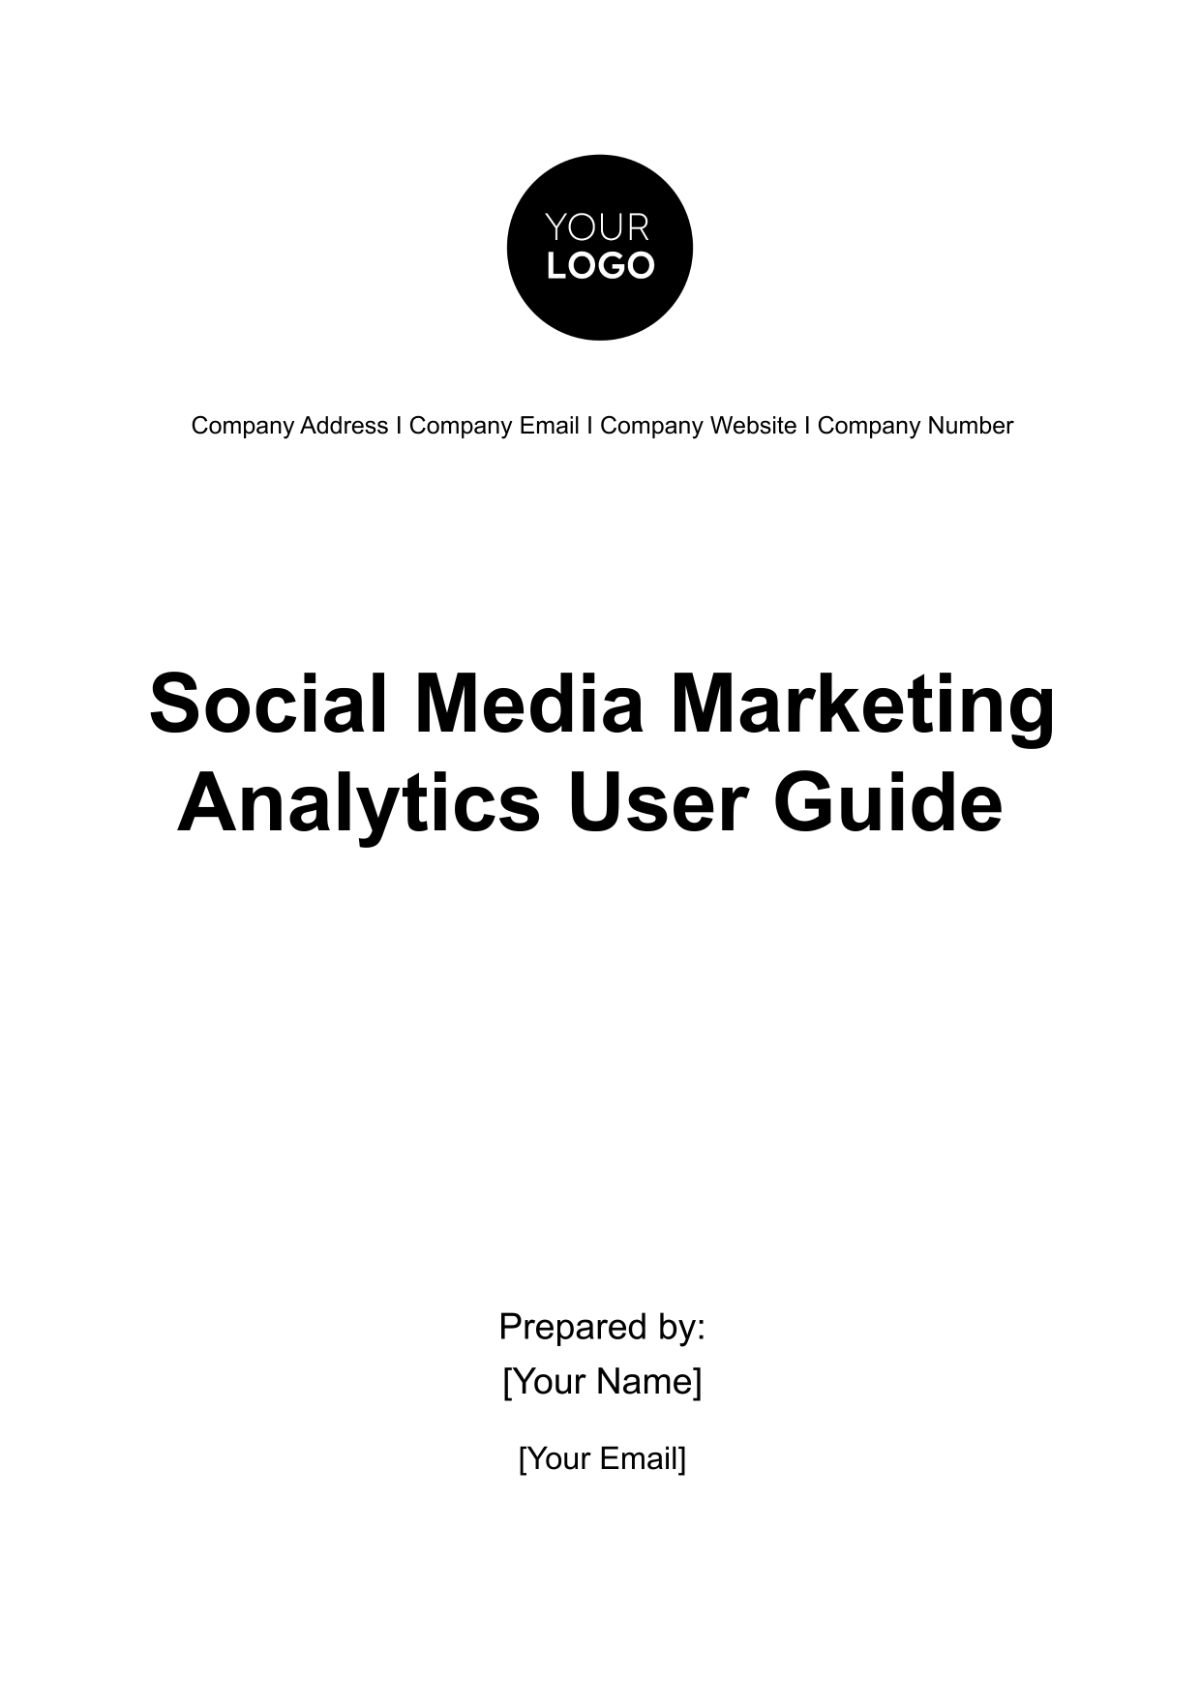 Social Media Marketing Analytics User Guide Template